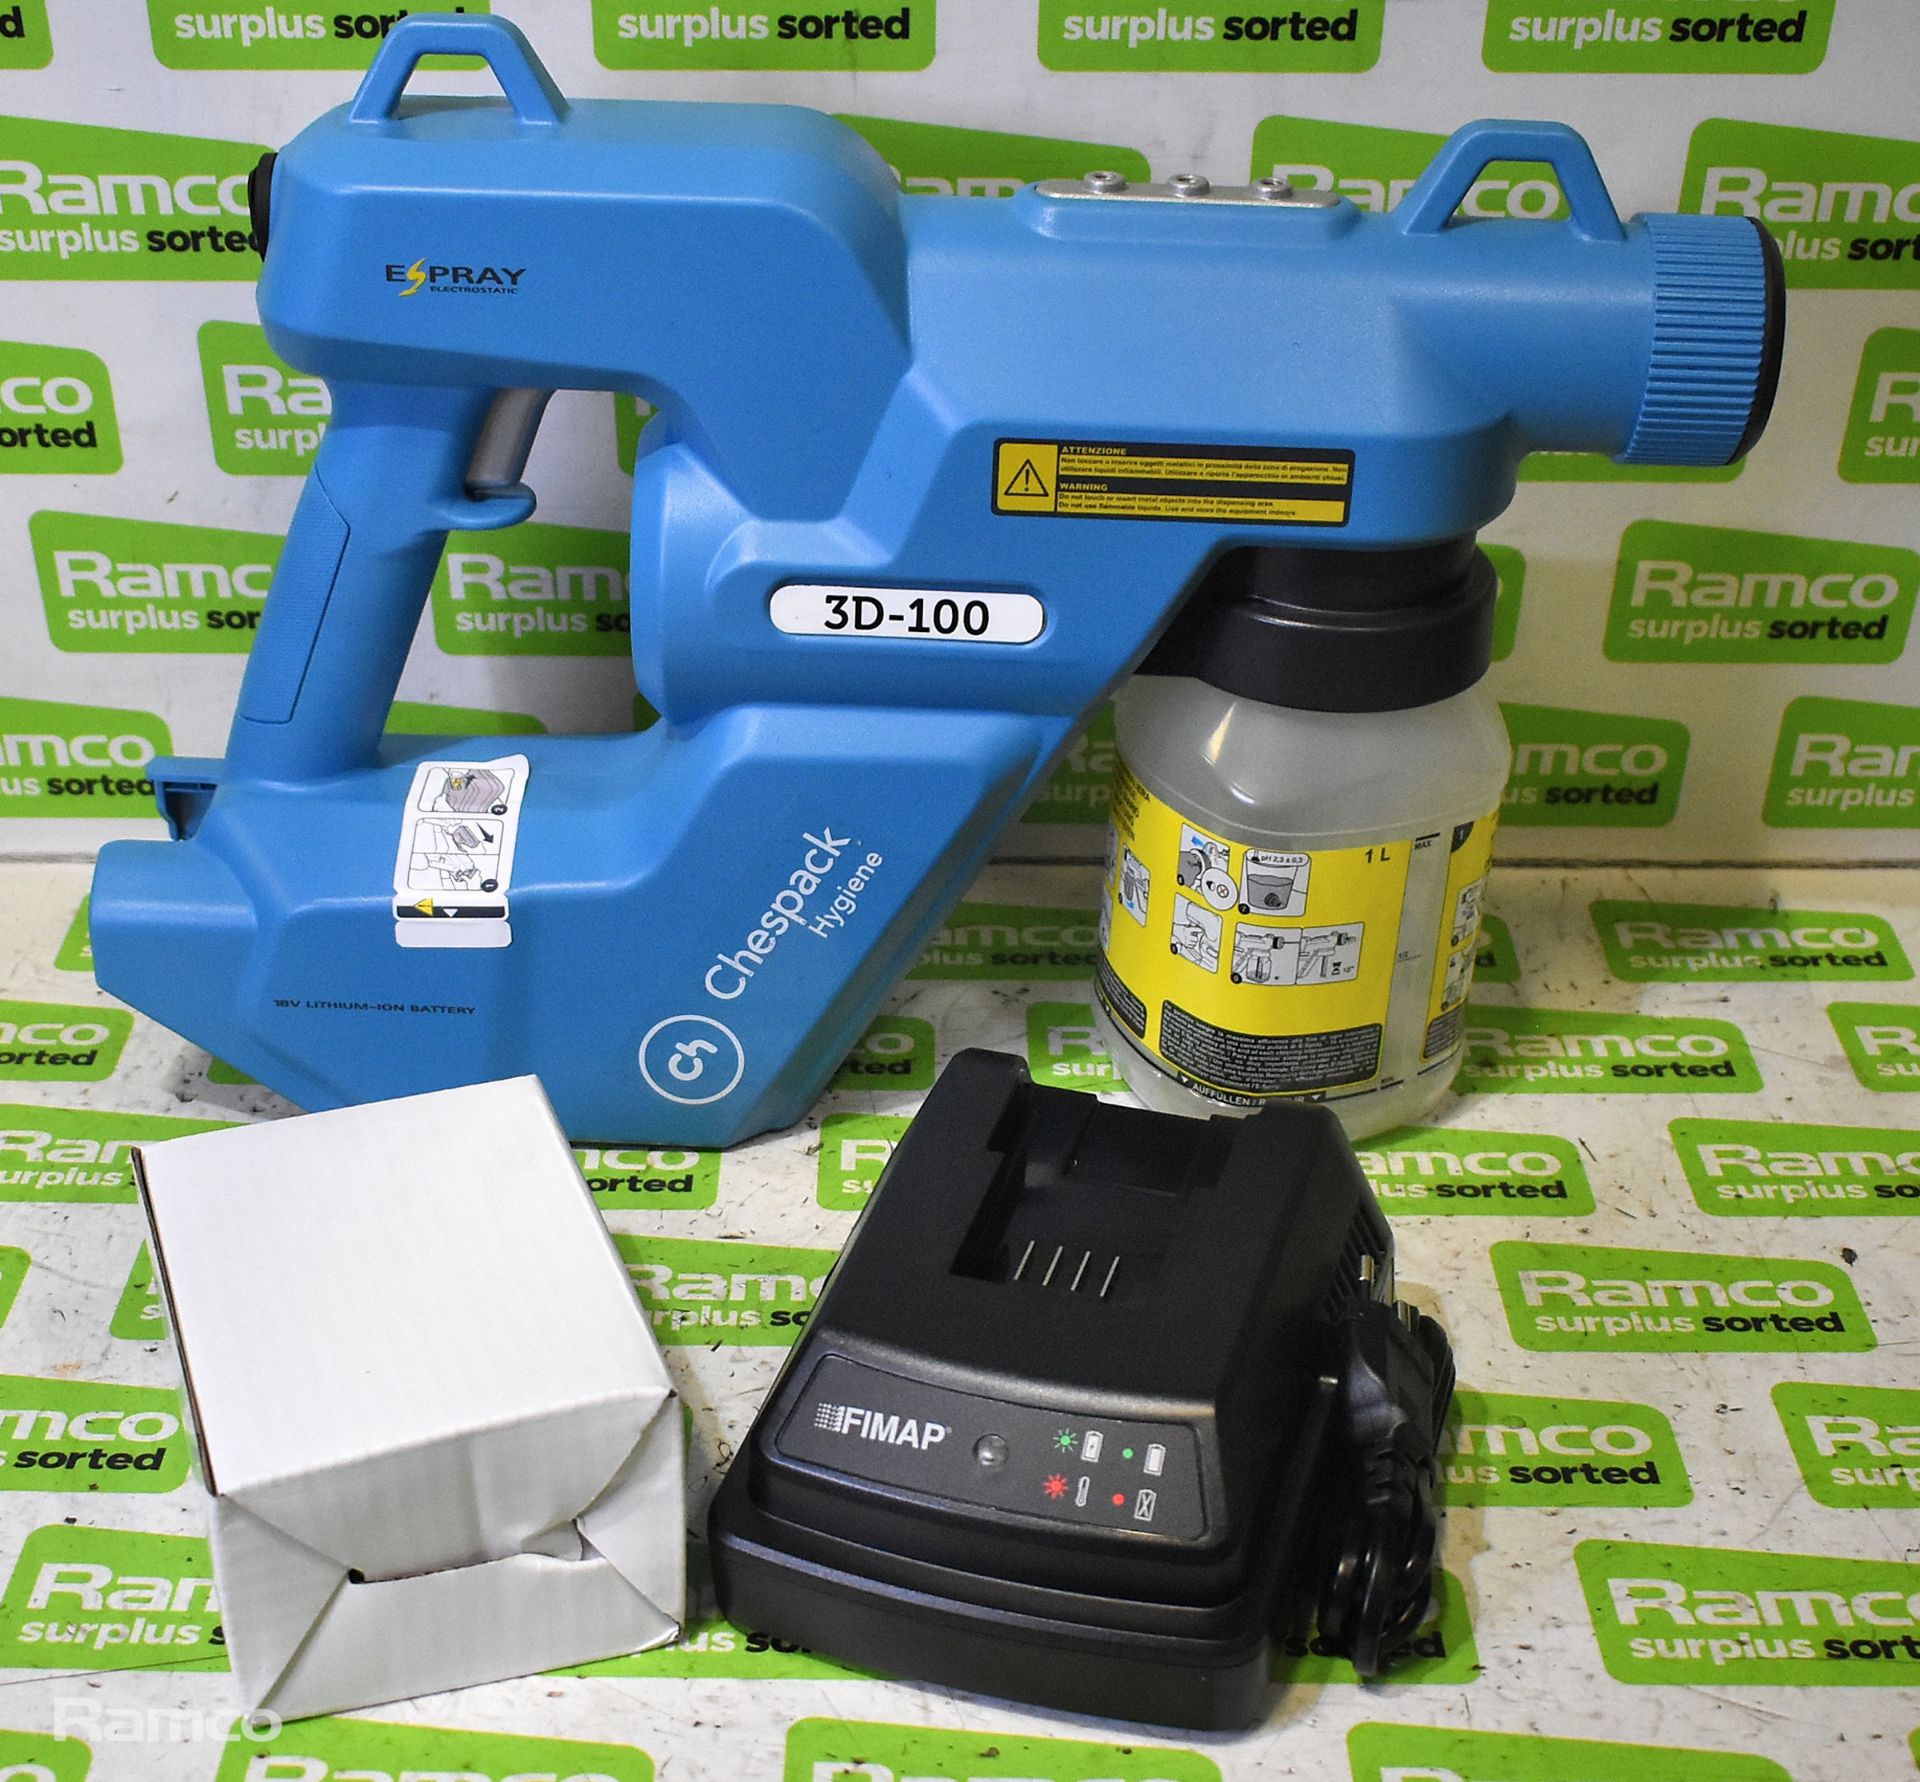 FIMAP E-Spray electrostatic hygienization industrial disinfection gun spray kit - Image 2 of 8